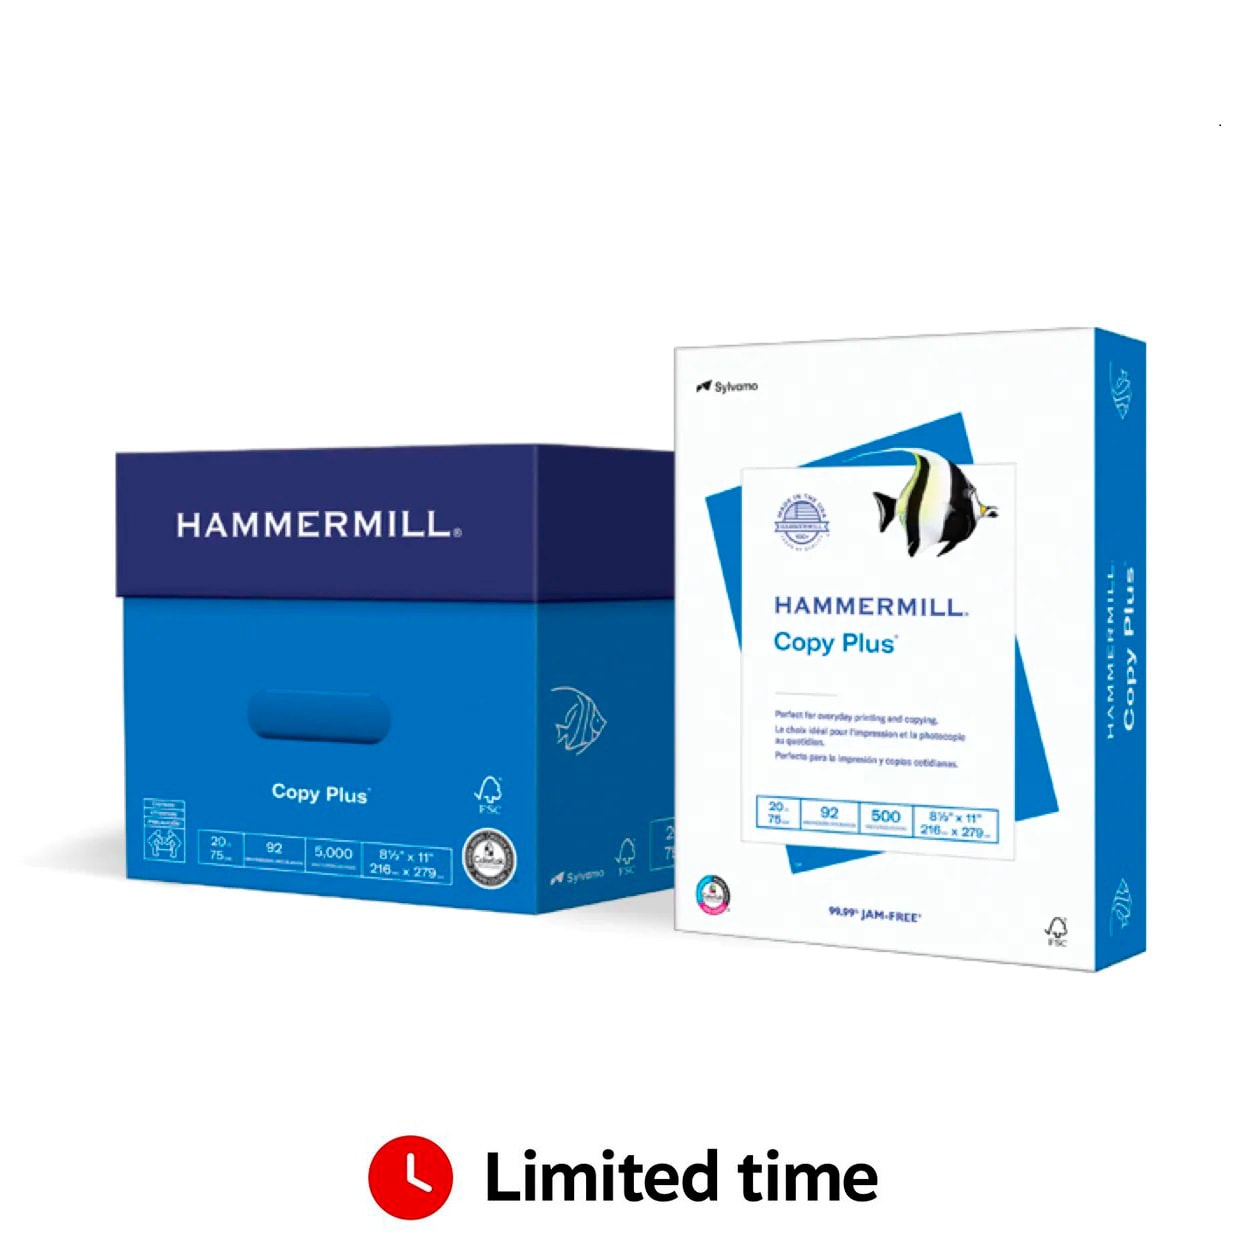 HAMMERMILL HAMMERMILL. Copy Plus Copy Plus @ Limited time 